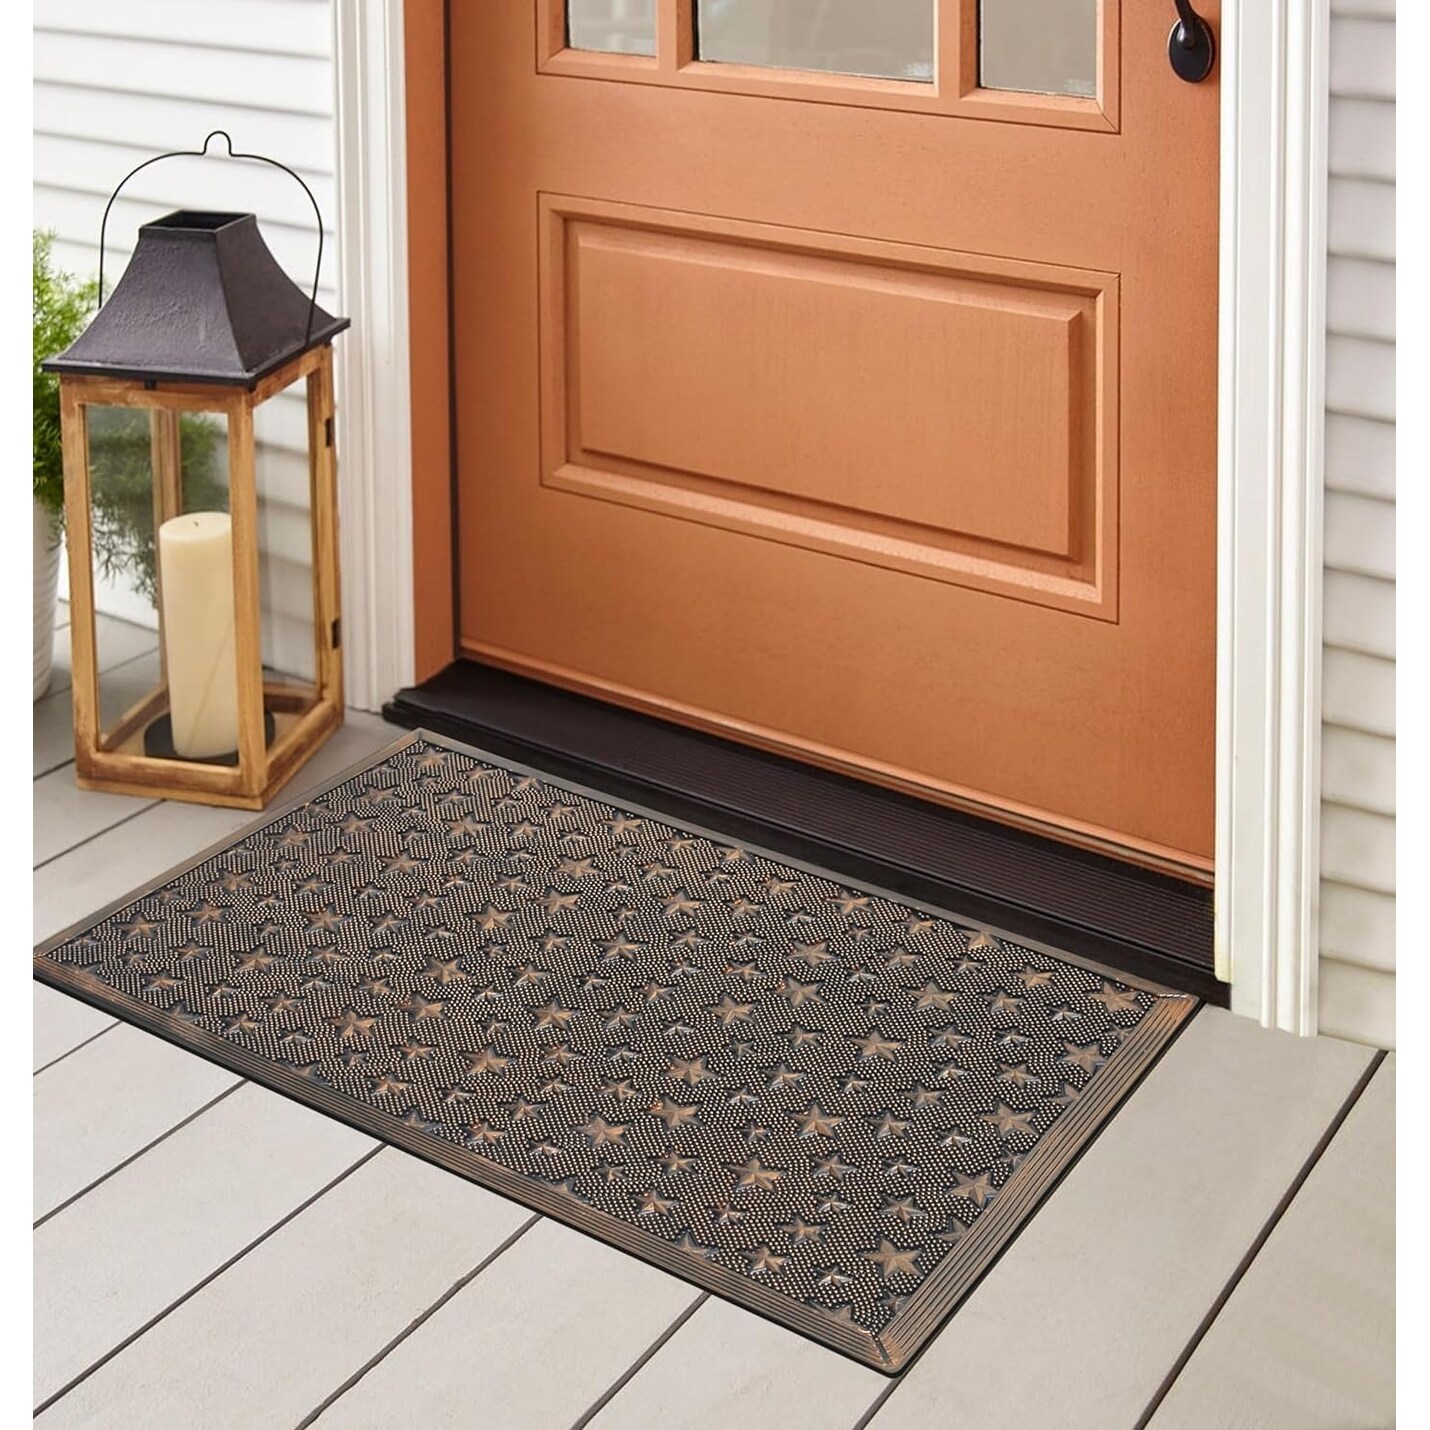 Disney, Disney Fall Mickey Welcome Doormat 18 X 30, Outdoor/indoor, Heavy  Duty Recycled Rubber, Non-slip Backing, Doormat, Fall 